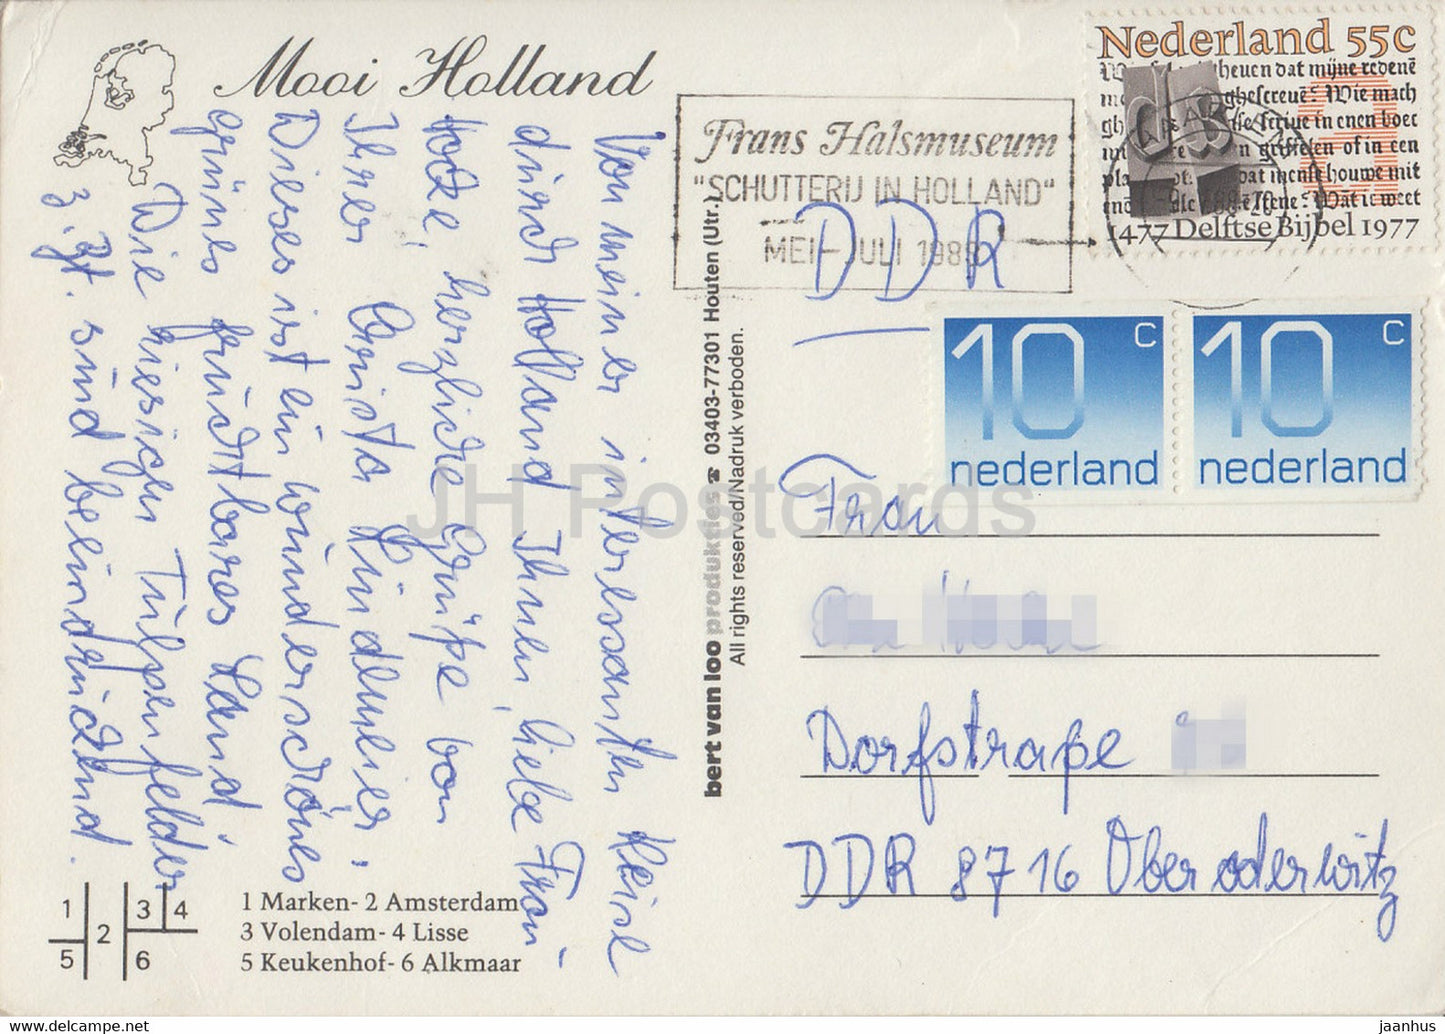 Mooi Holland - Käse - Amsterdam - Volendam - Lisse - Keukenhof - Volkskostüme - 1988 - Niederlande - gebraucht